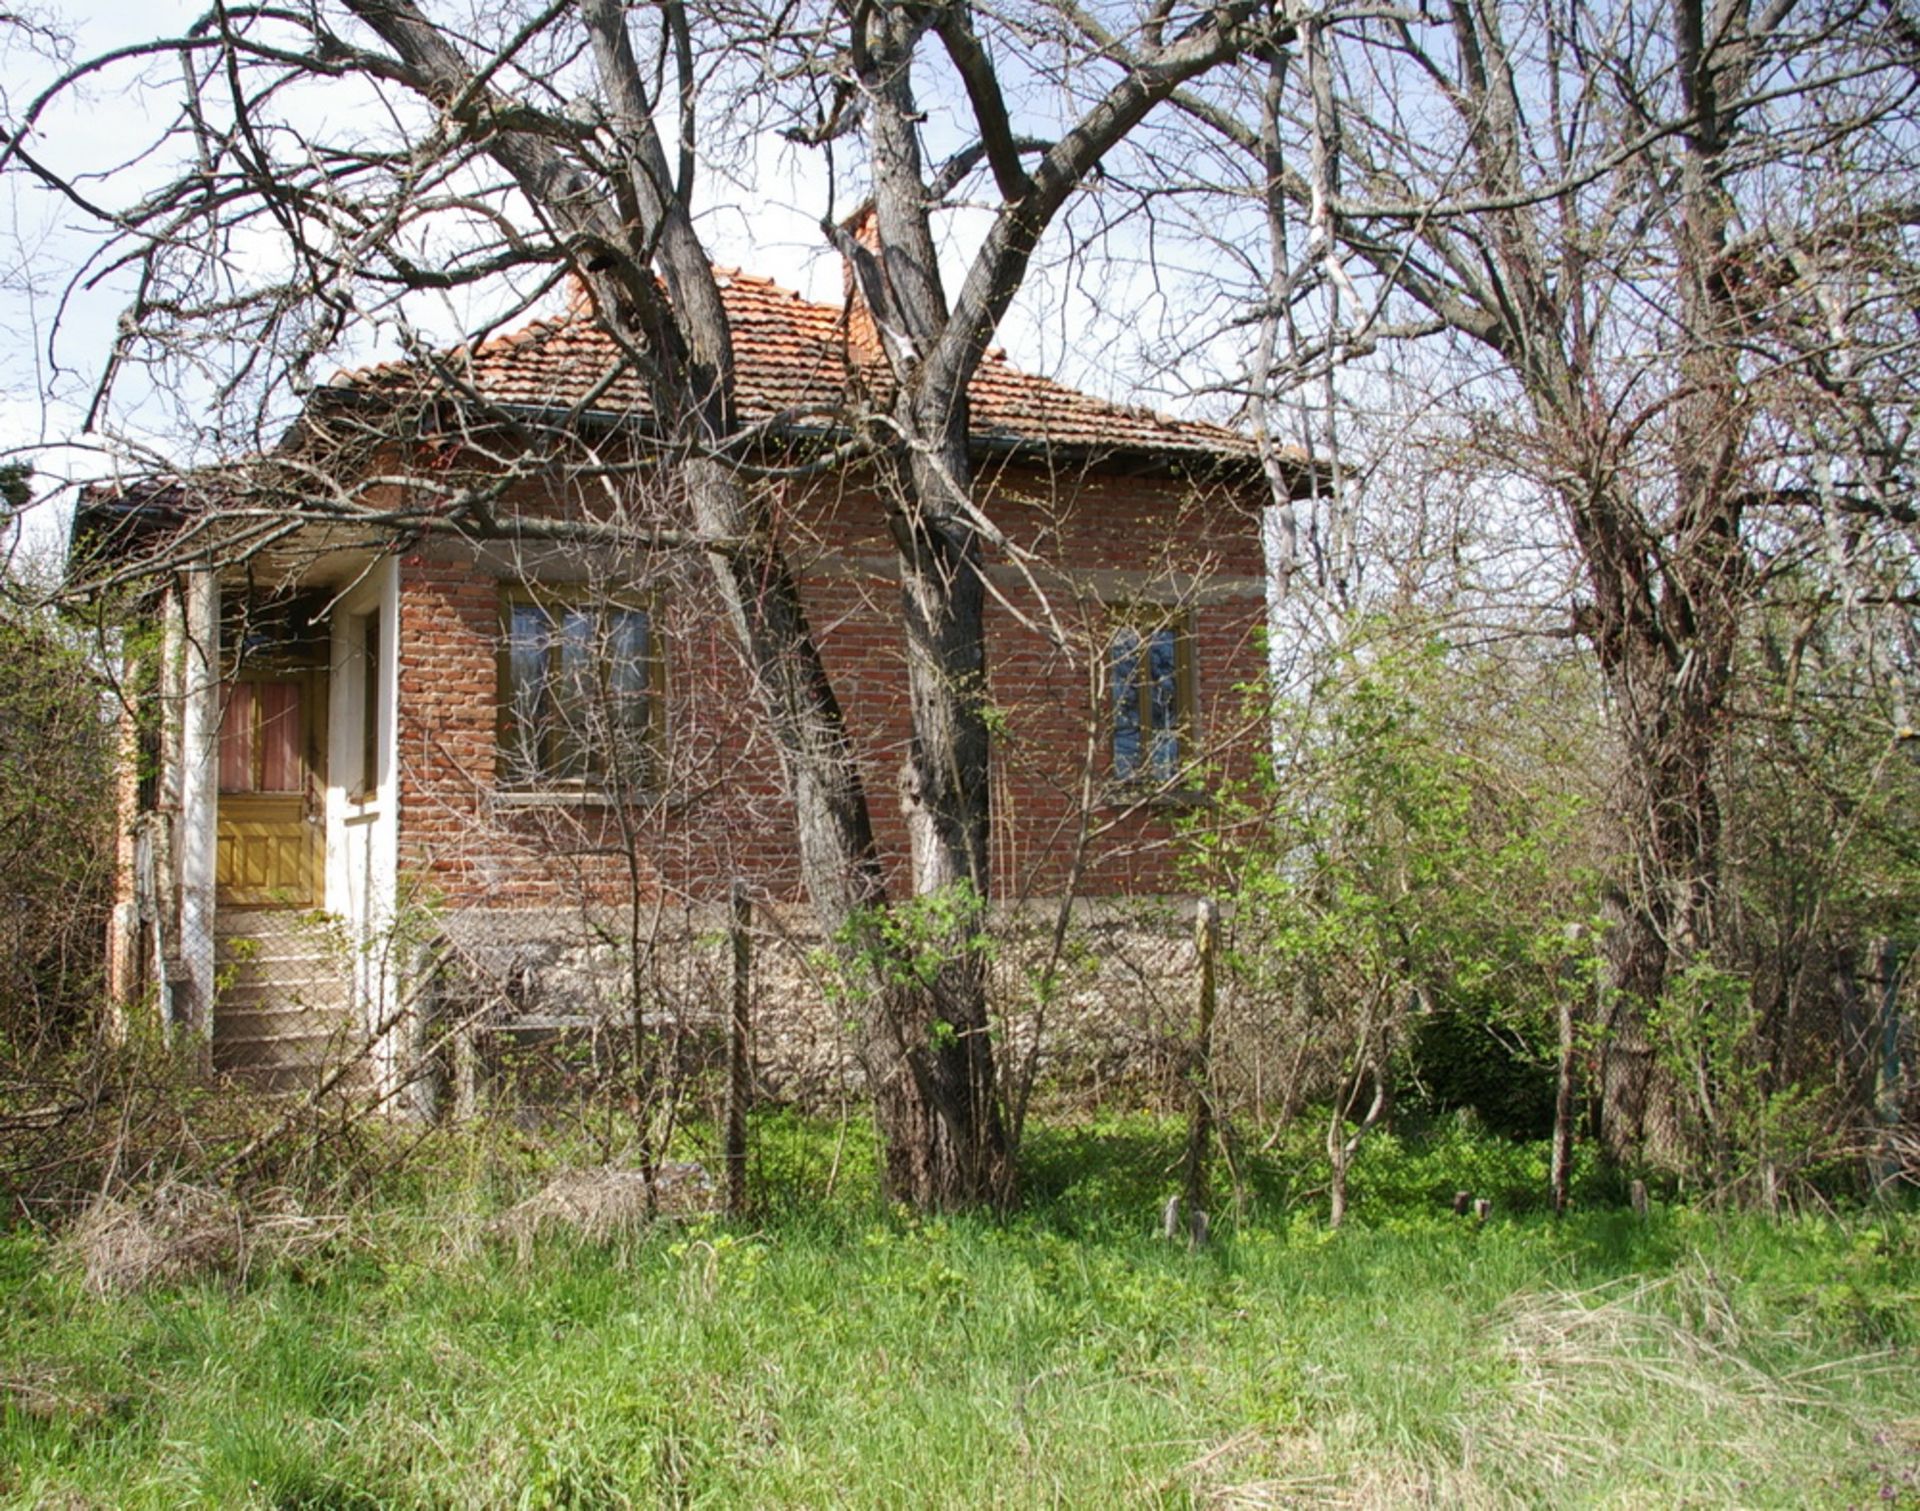 Property in Lagoshevtsi, Vidin region, Bulgaria, with 1.26 Acre land - Image 4 of 17